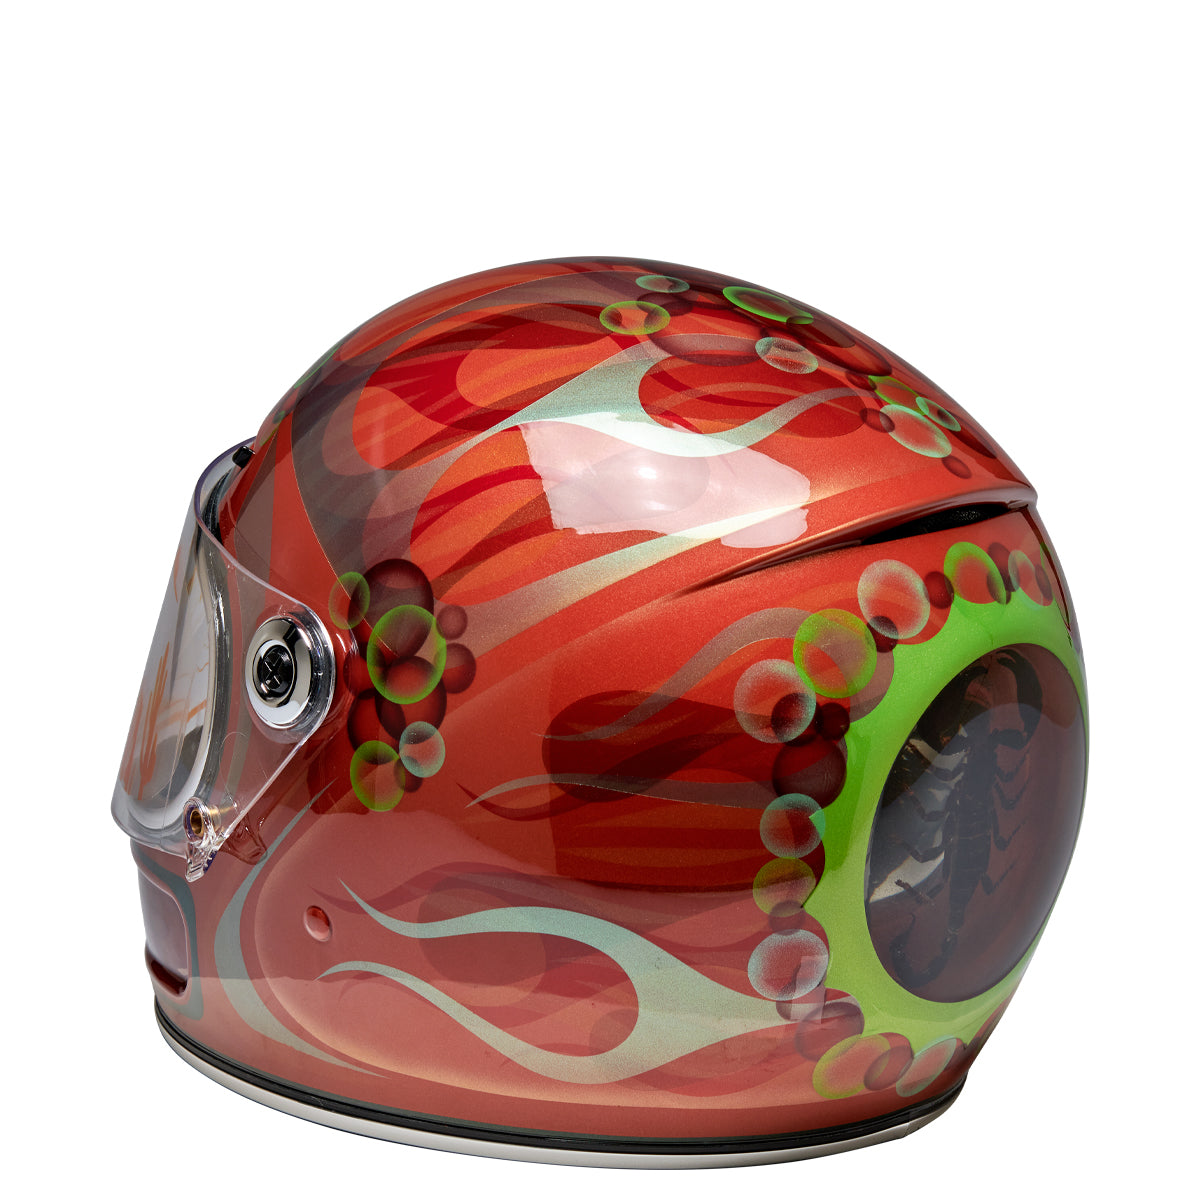 Custom Painted Gringo SV Helmet by Frank Giambattista